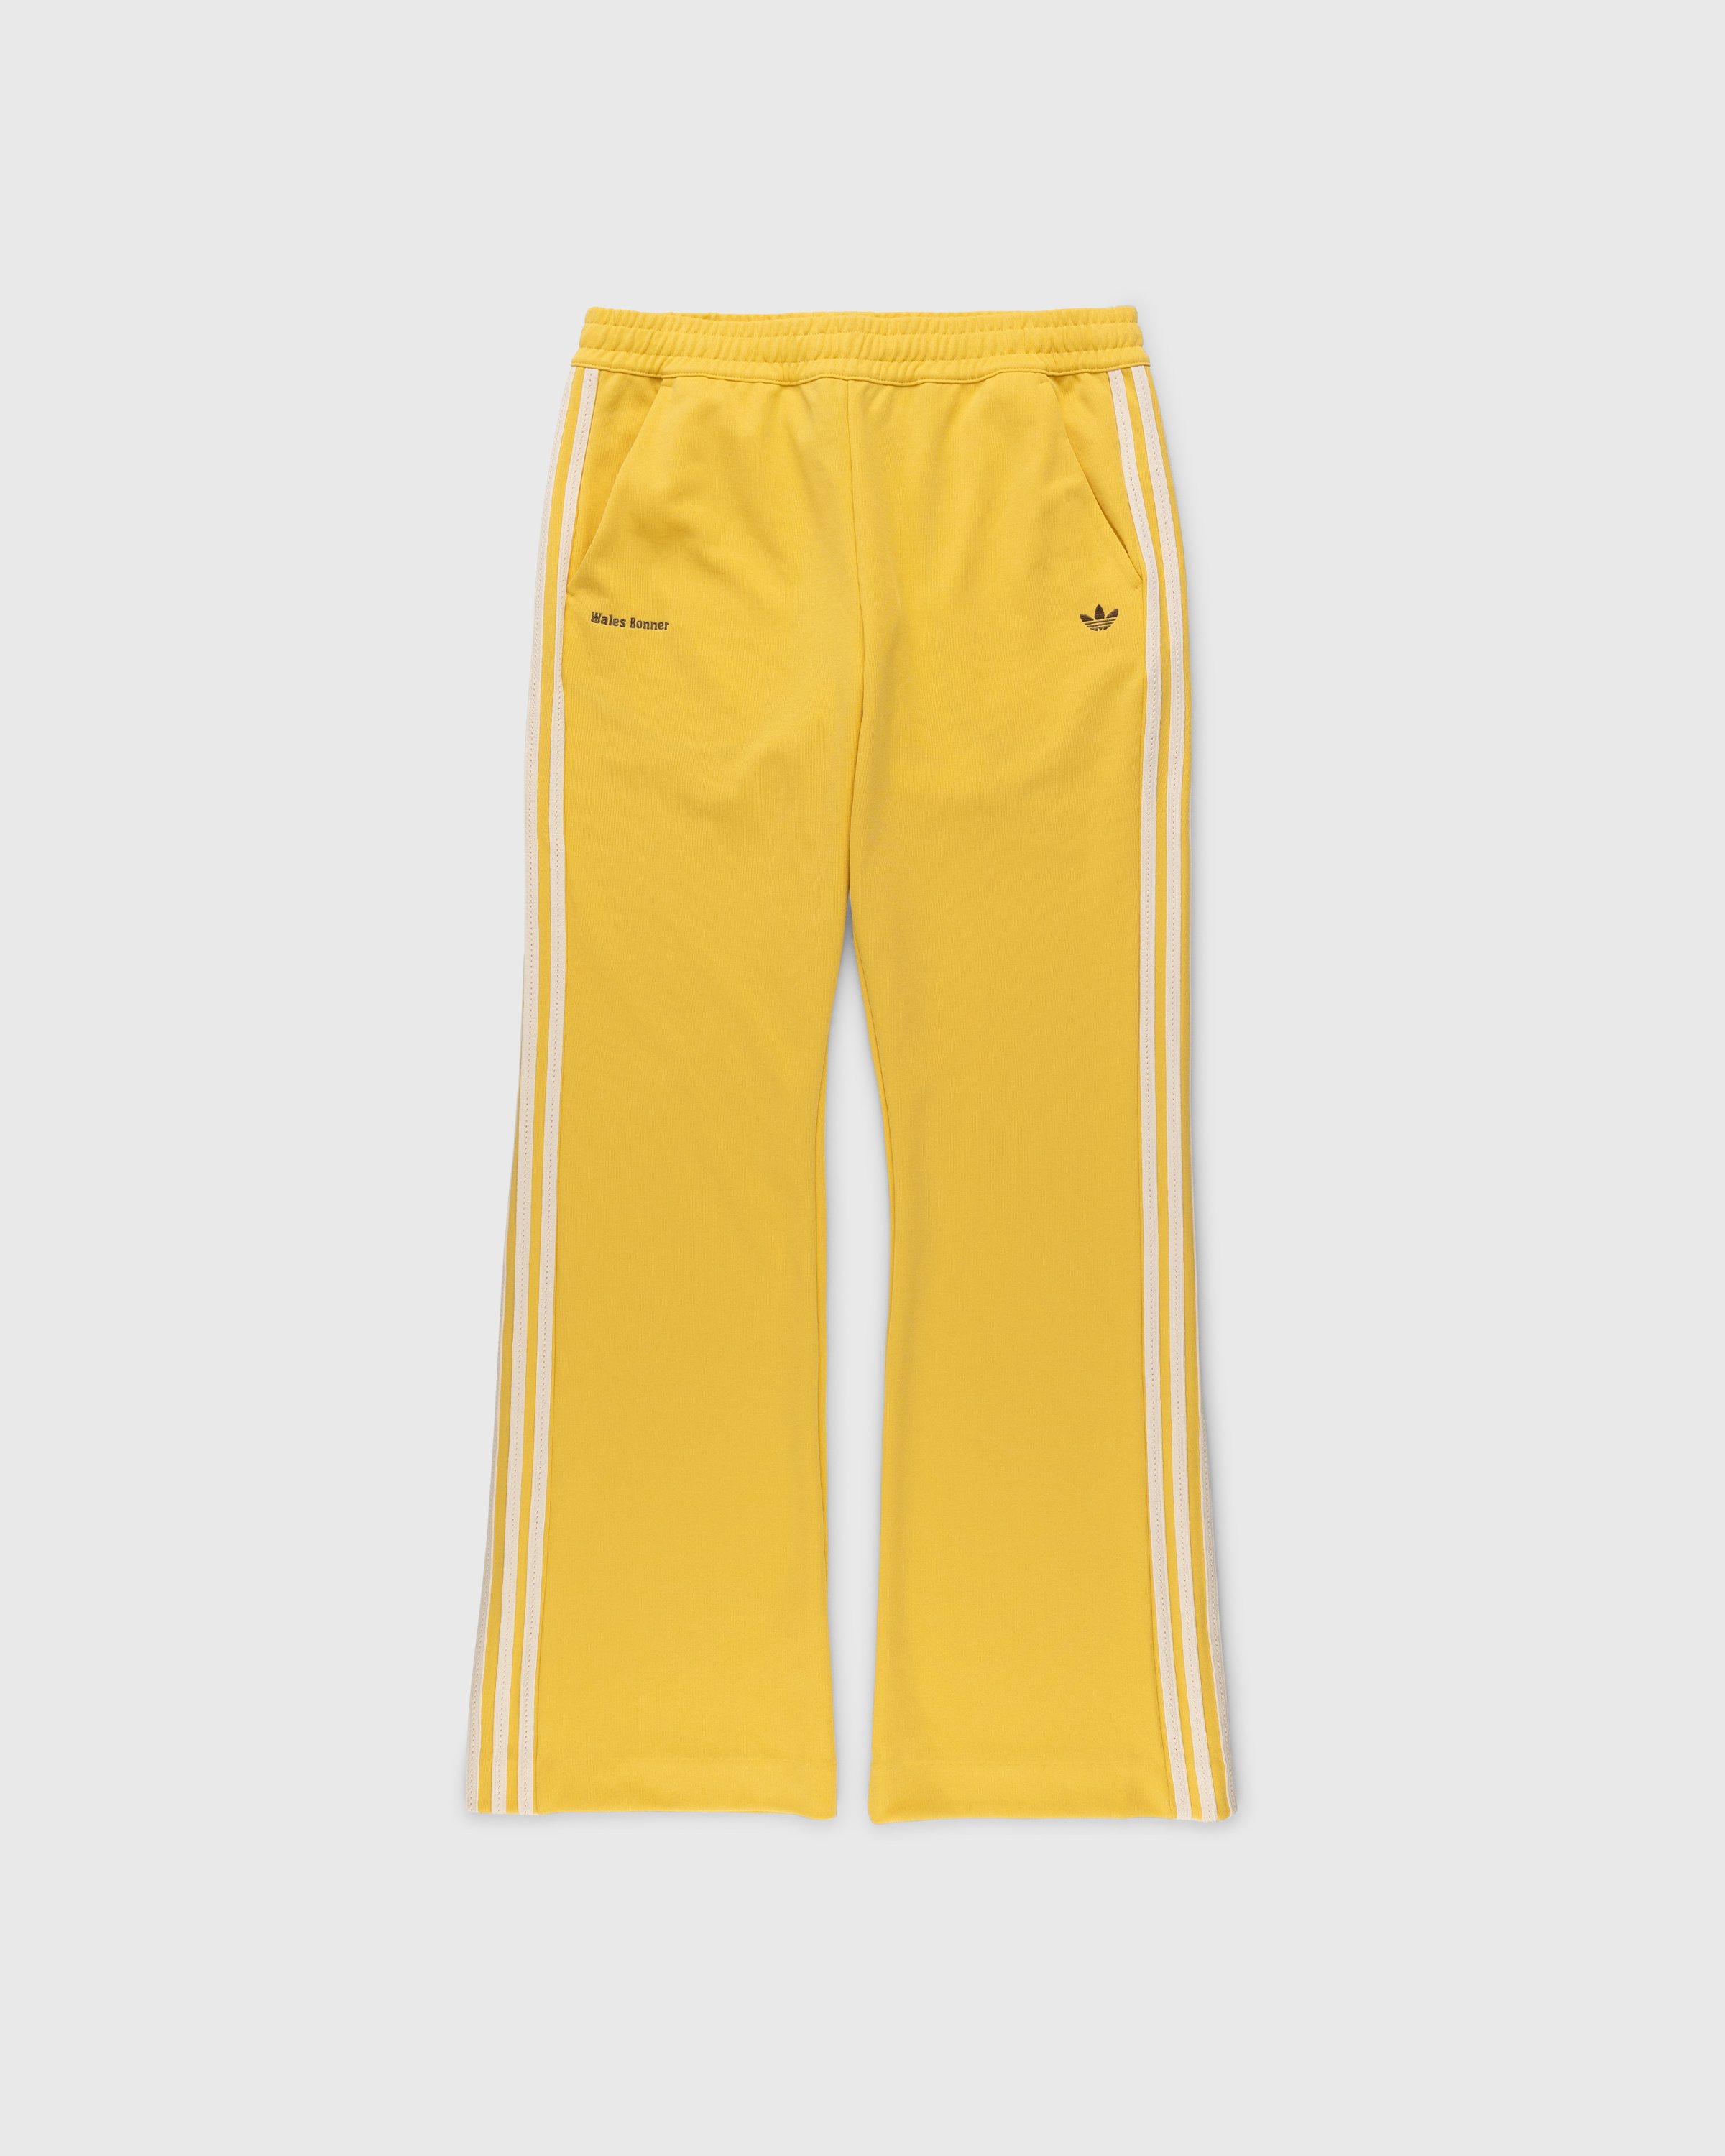 Adidas x Wales Bonner - WB Track Pants St Fade Gold - Clothing - Yellow - Image 1